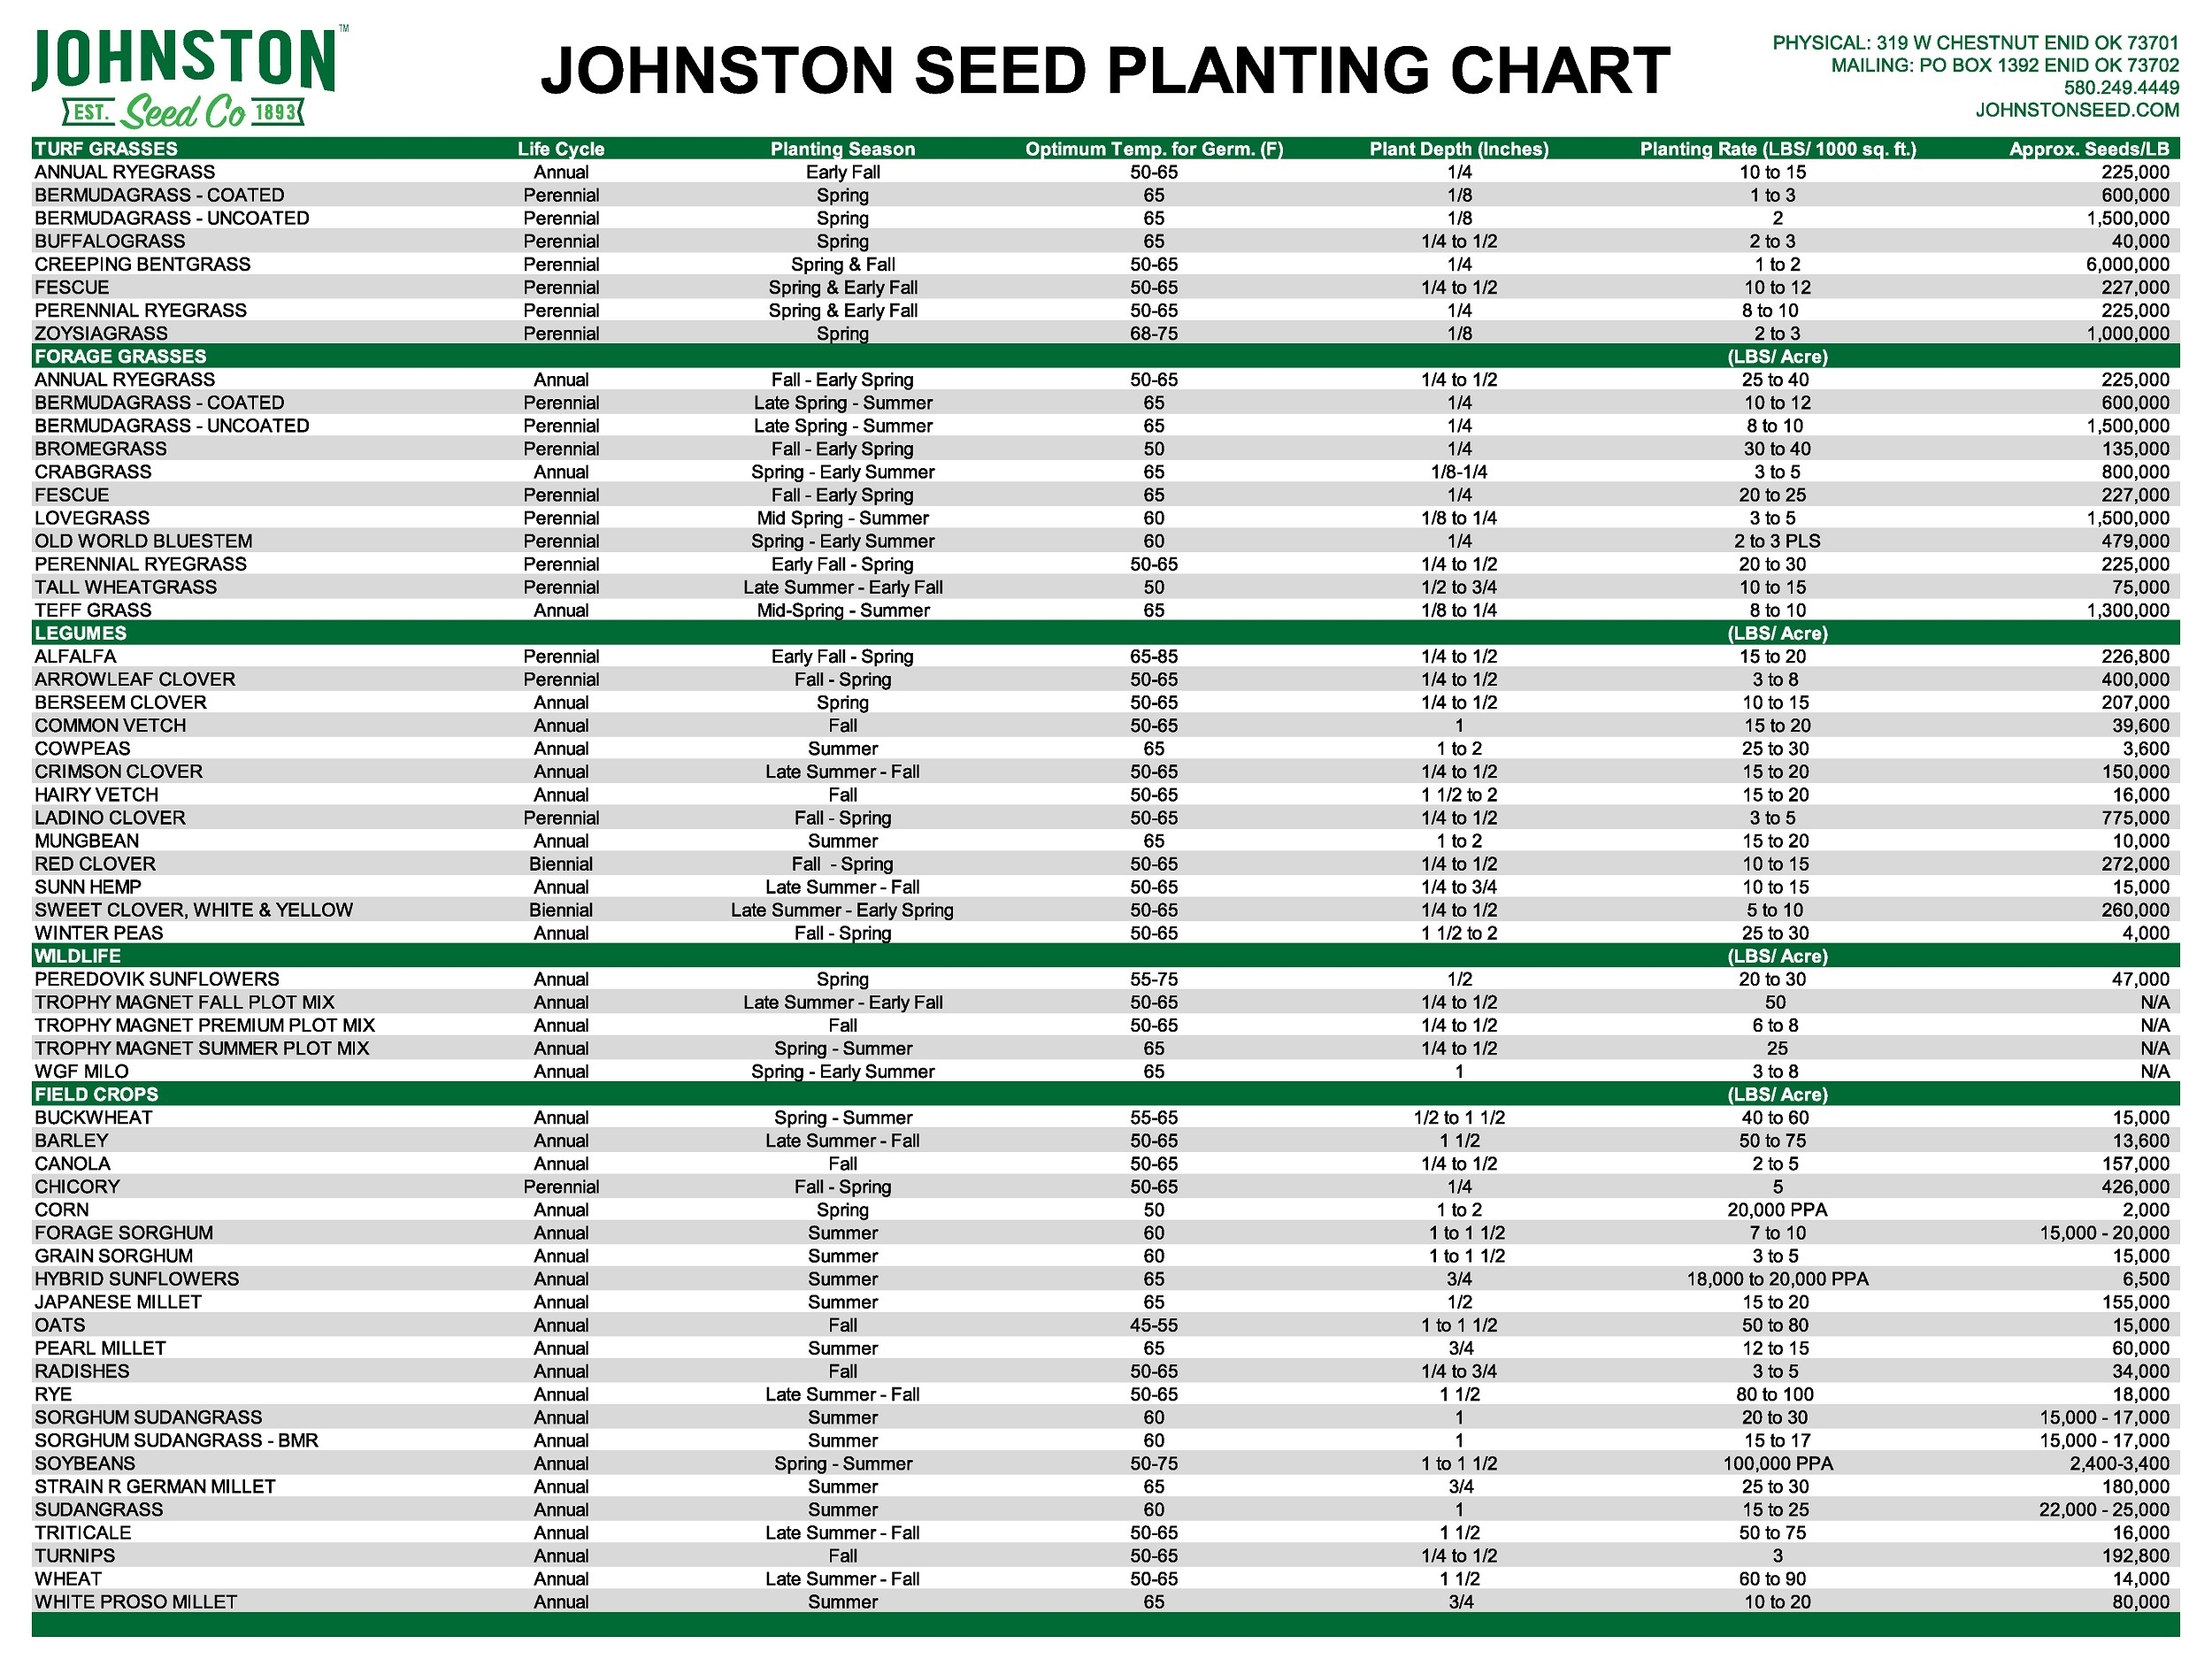 Johnston Seed Company Planting Chart Johnston Seed Company